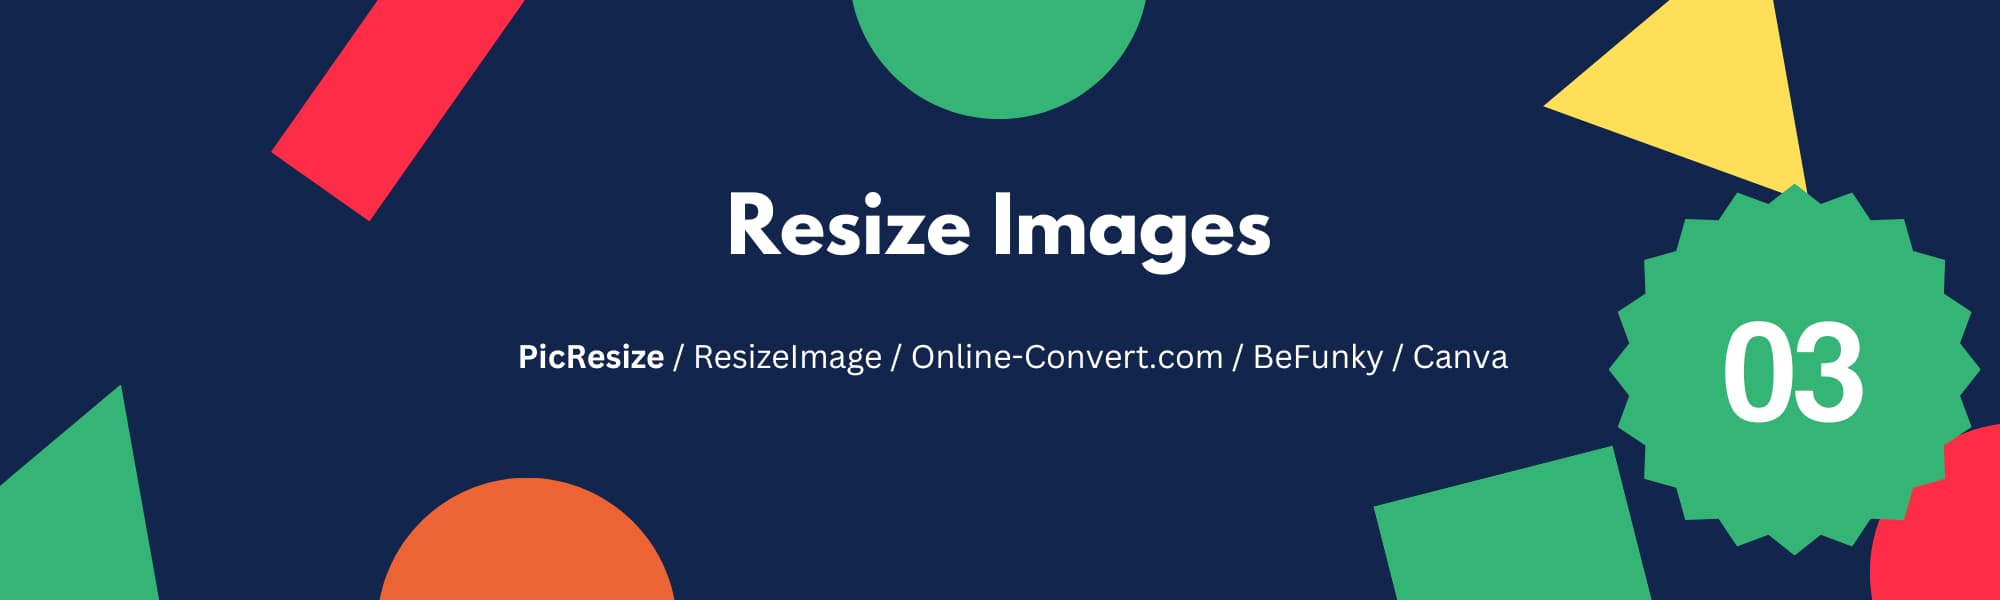 Resize Images